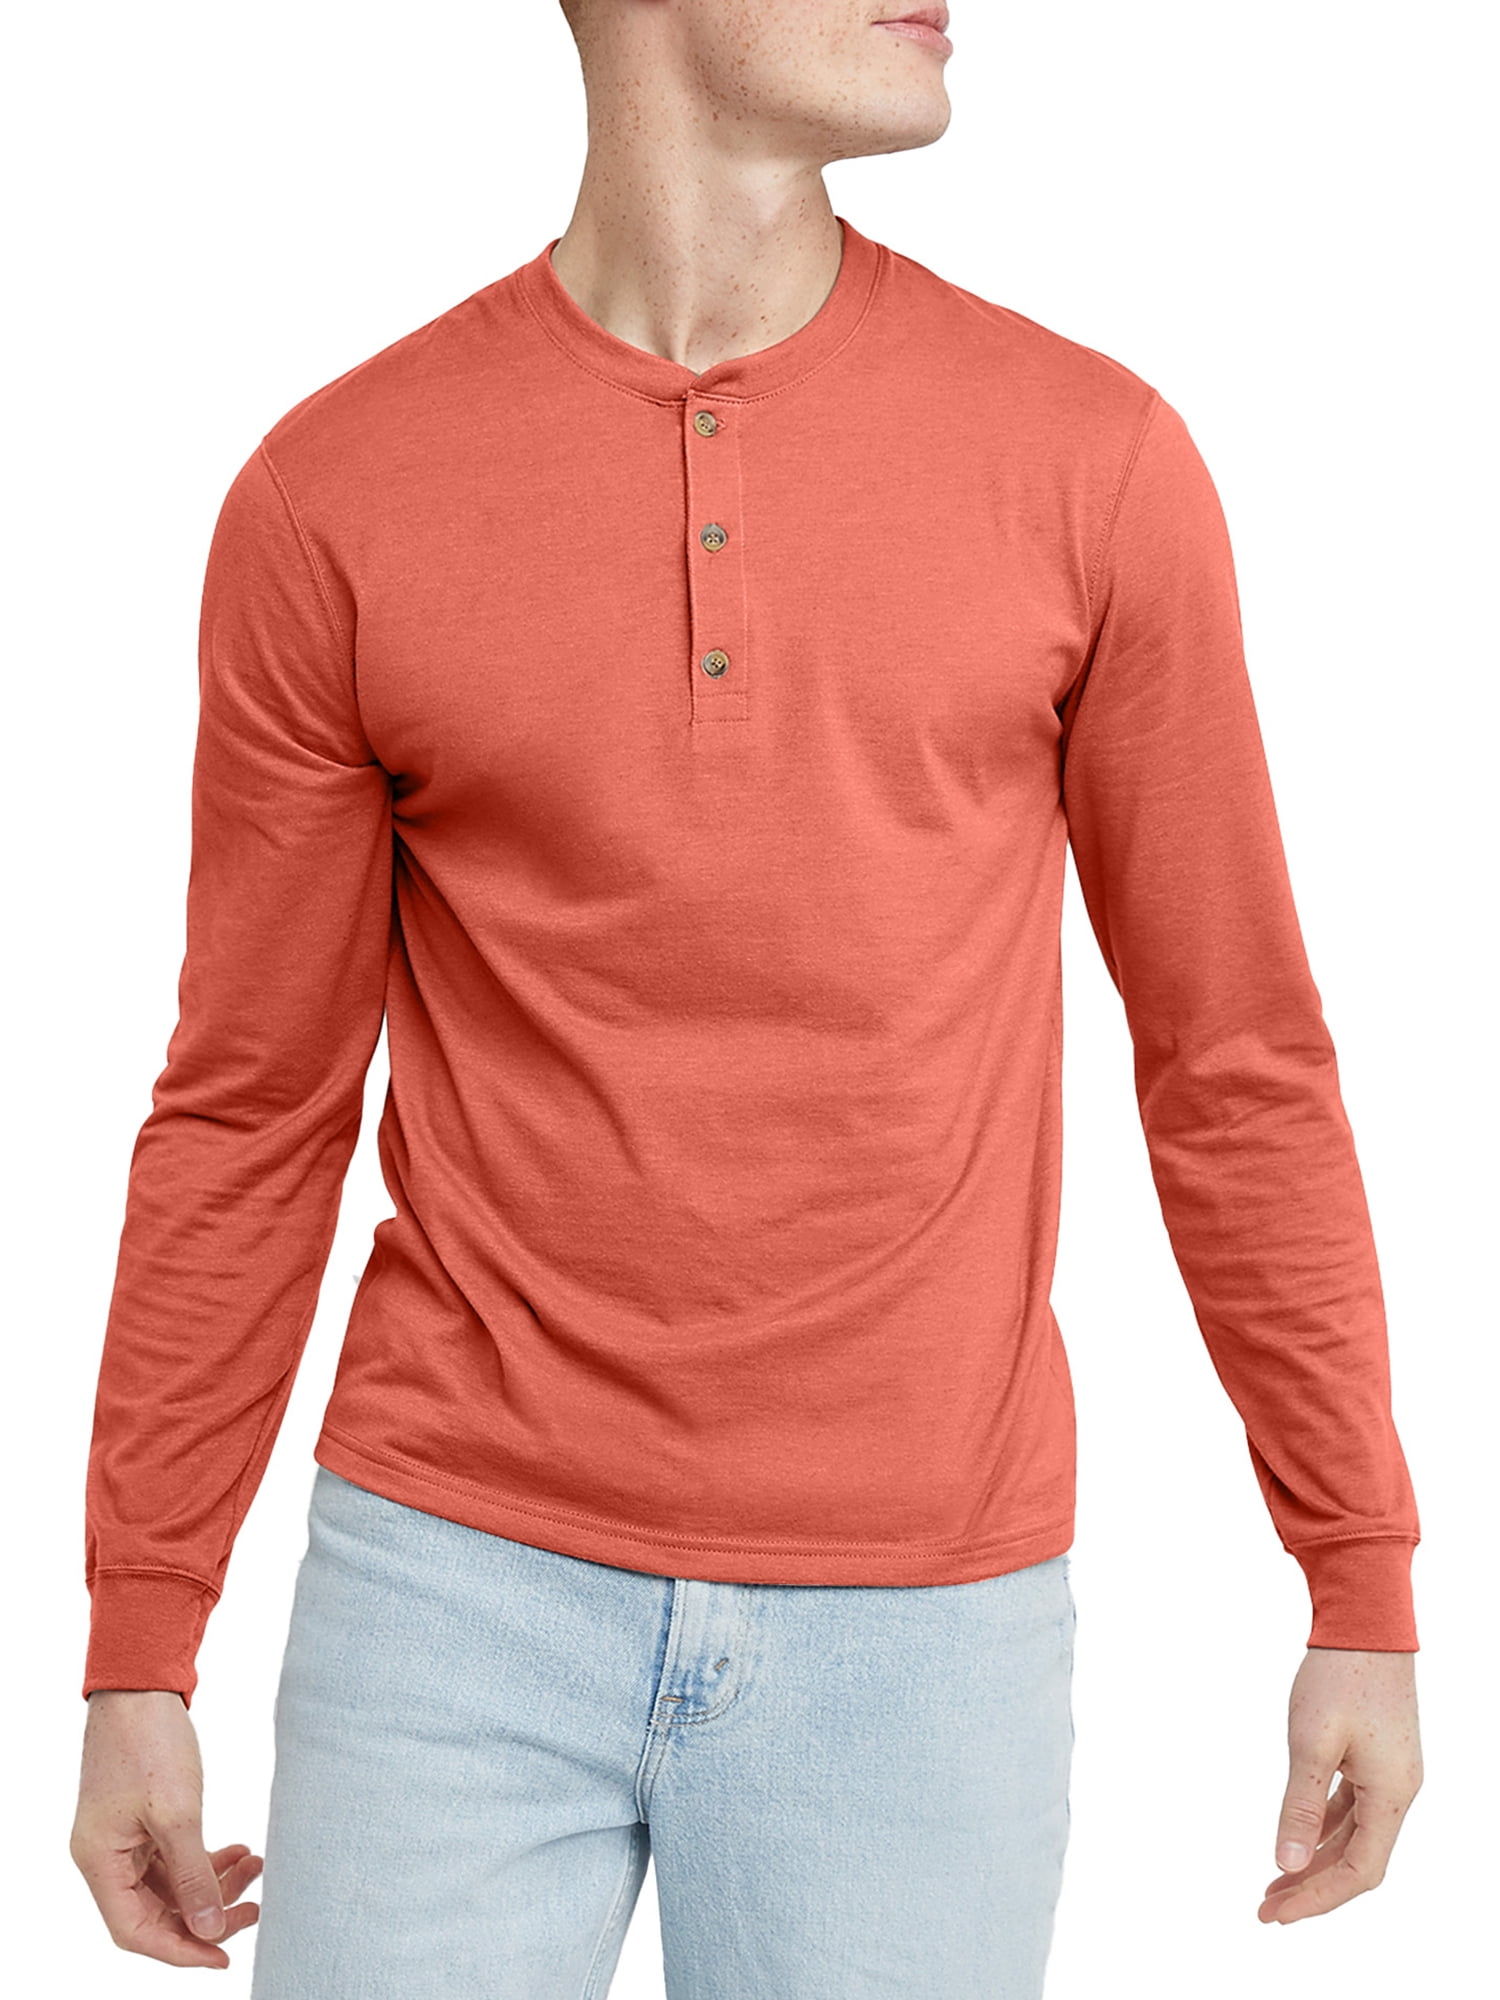 Hanes Originals Men's Long Sleeve Henley T-Shirt